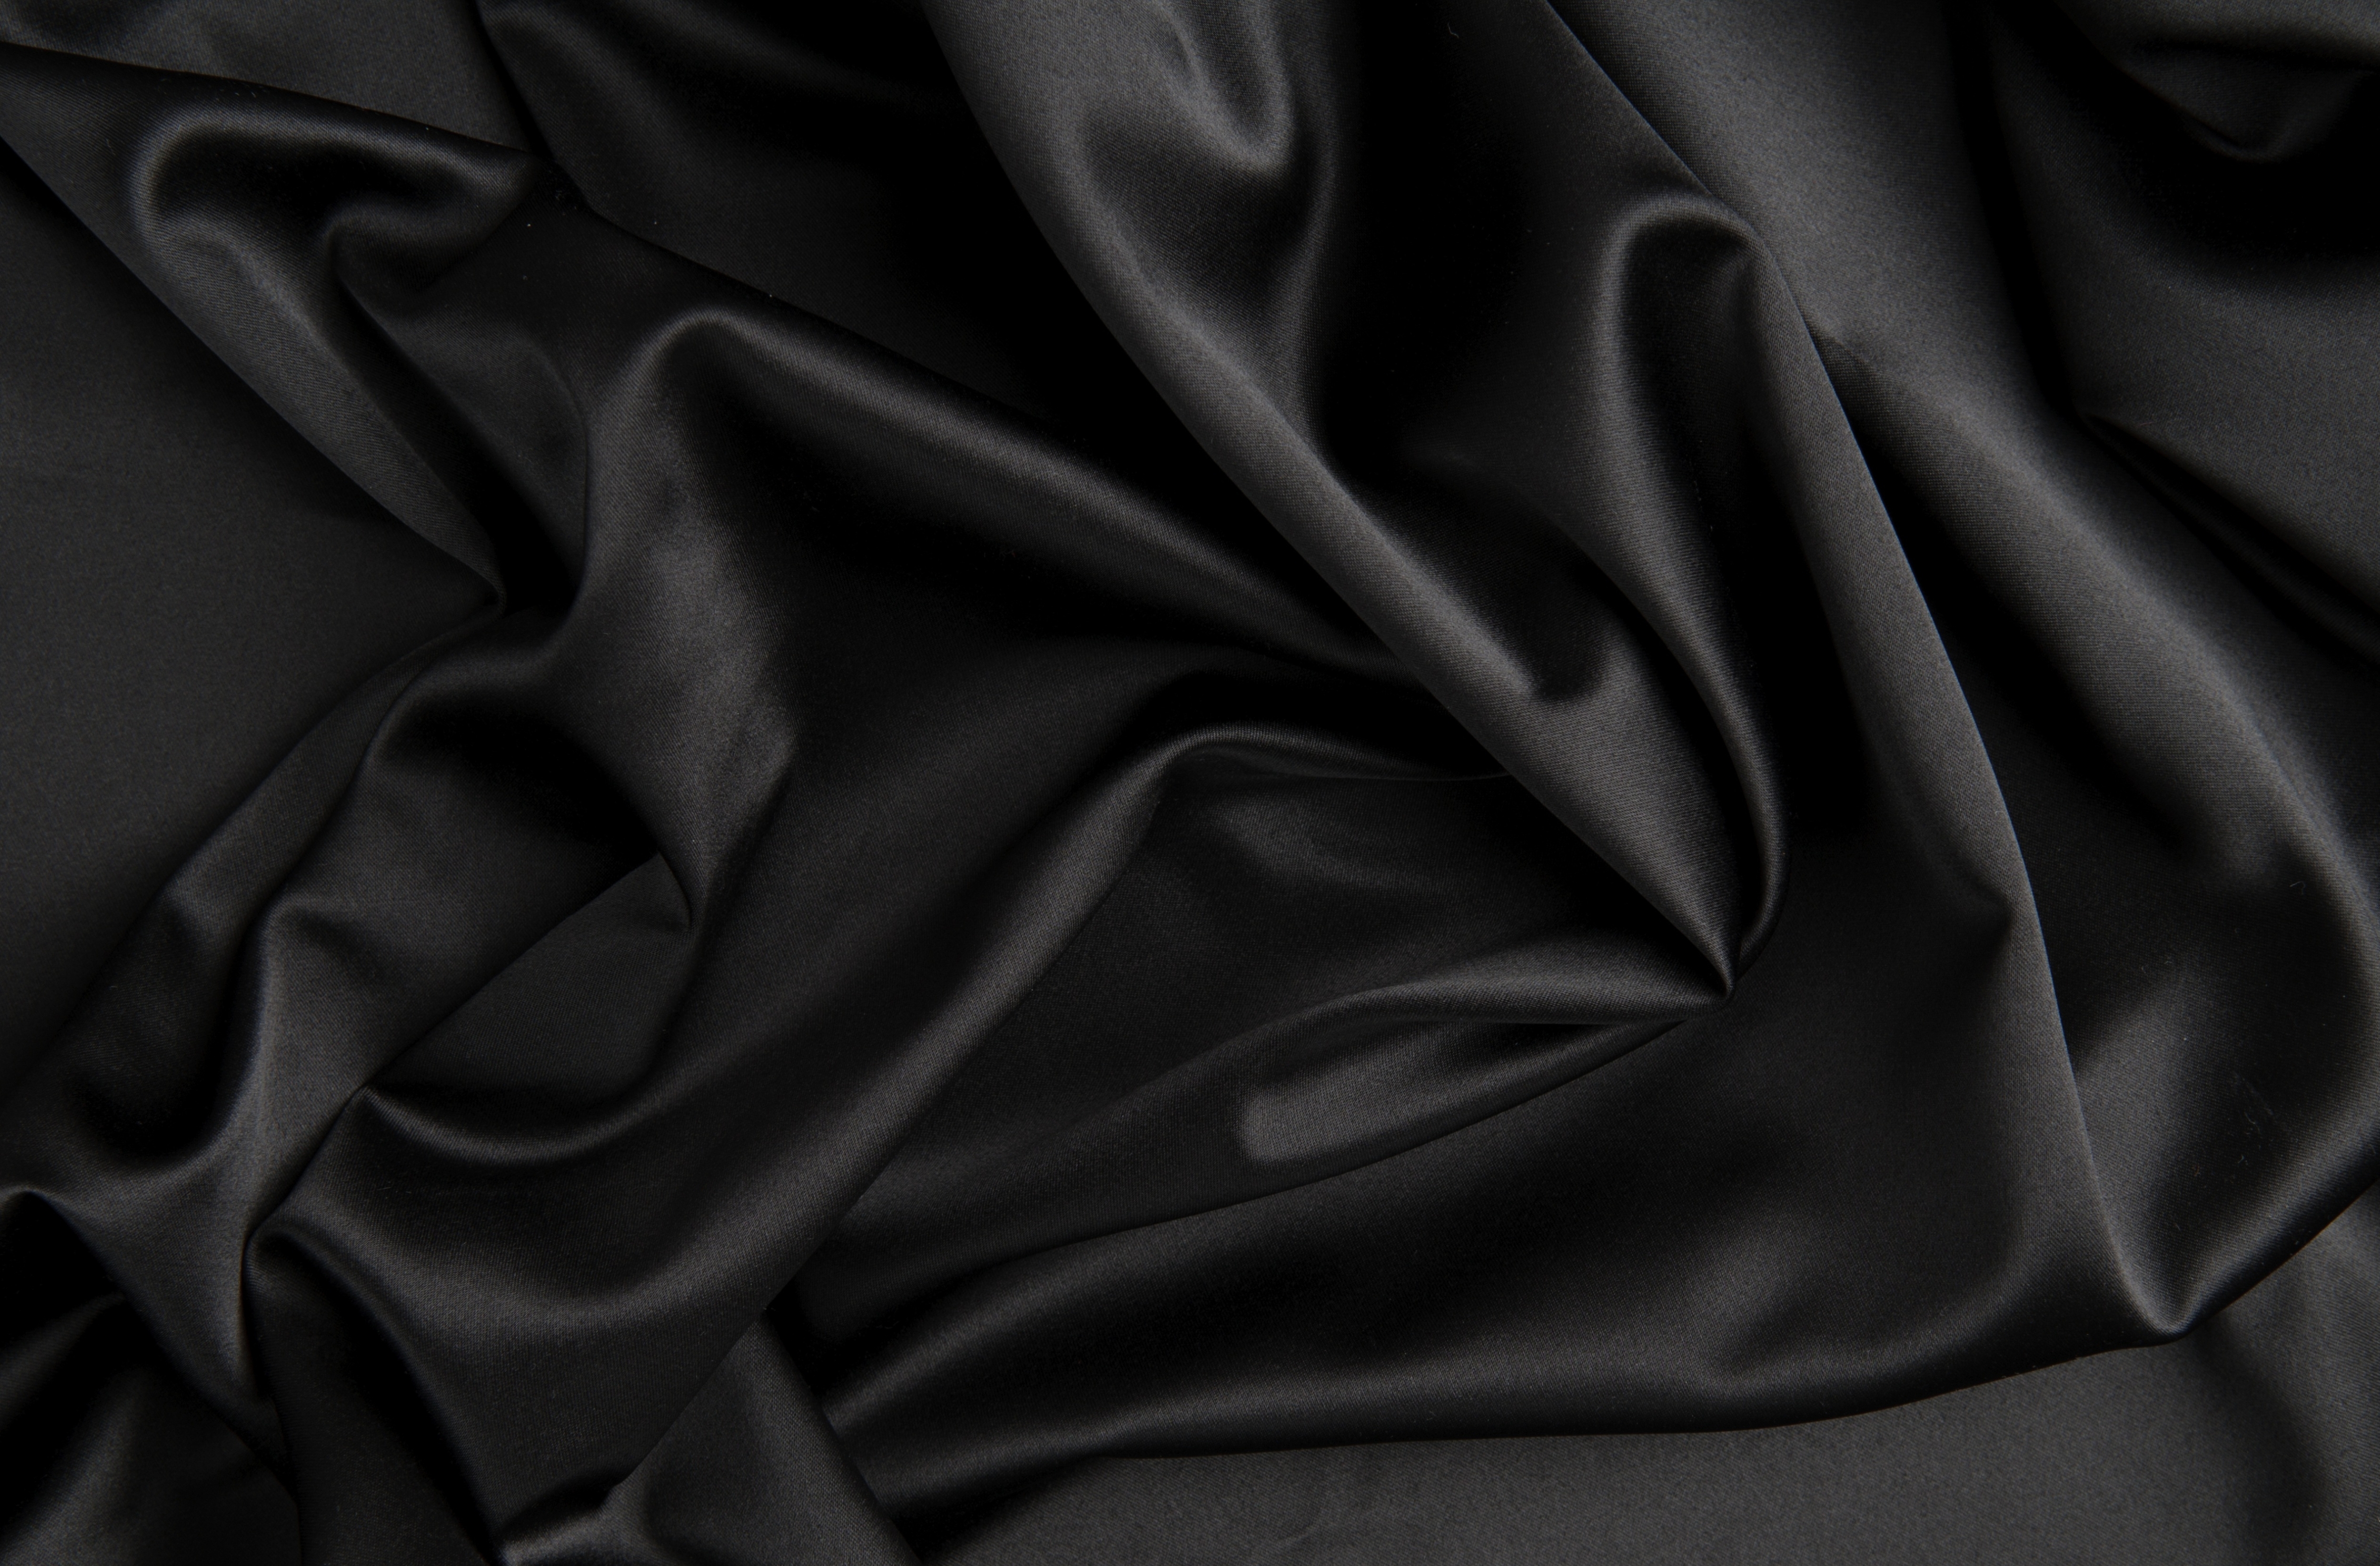 Silk Satin Cloth Black Folds Texture